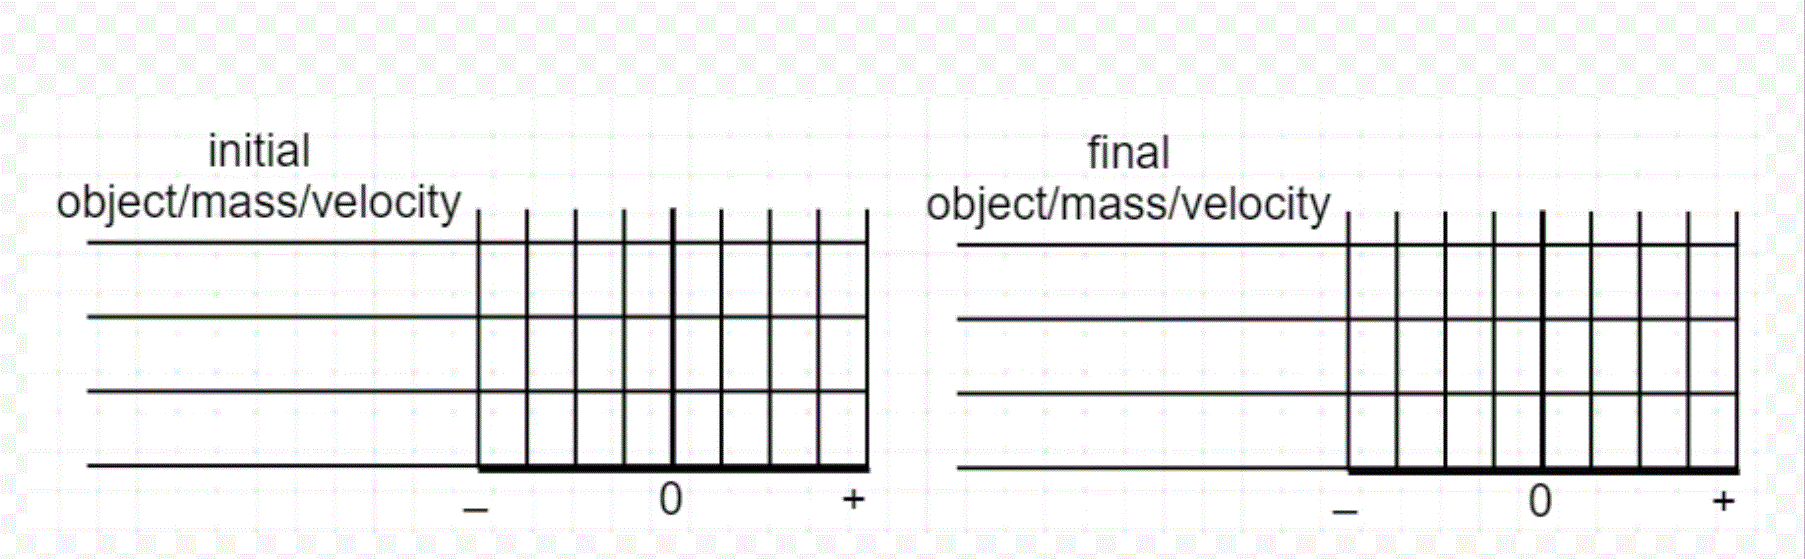 initial
final
object/mass/velocity
object/mass/velocity
